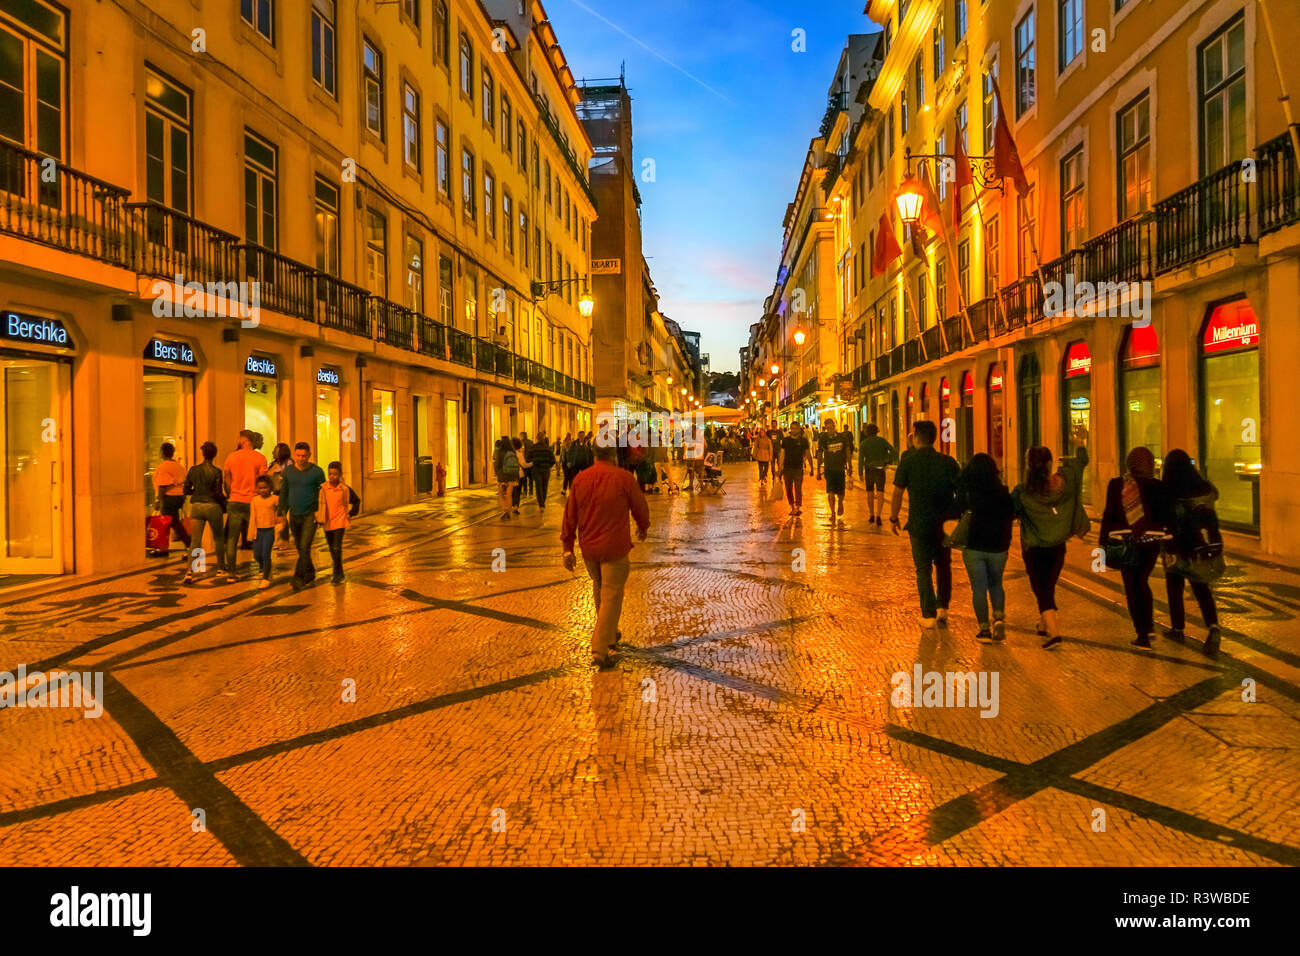 Rua Augusta, shops and restaurants, street with black and white tiles, Baixa, Lisbon, Portugal. Stock Photo